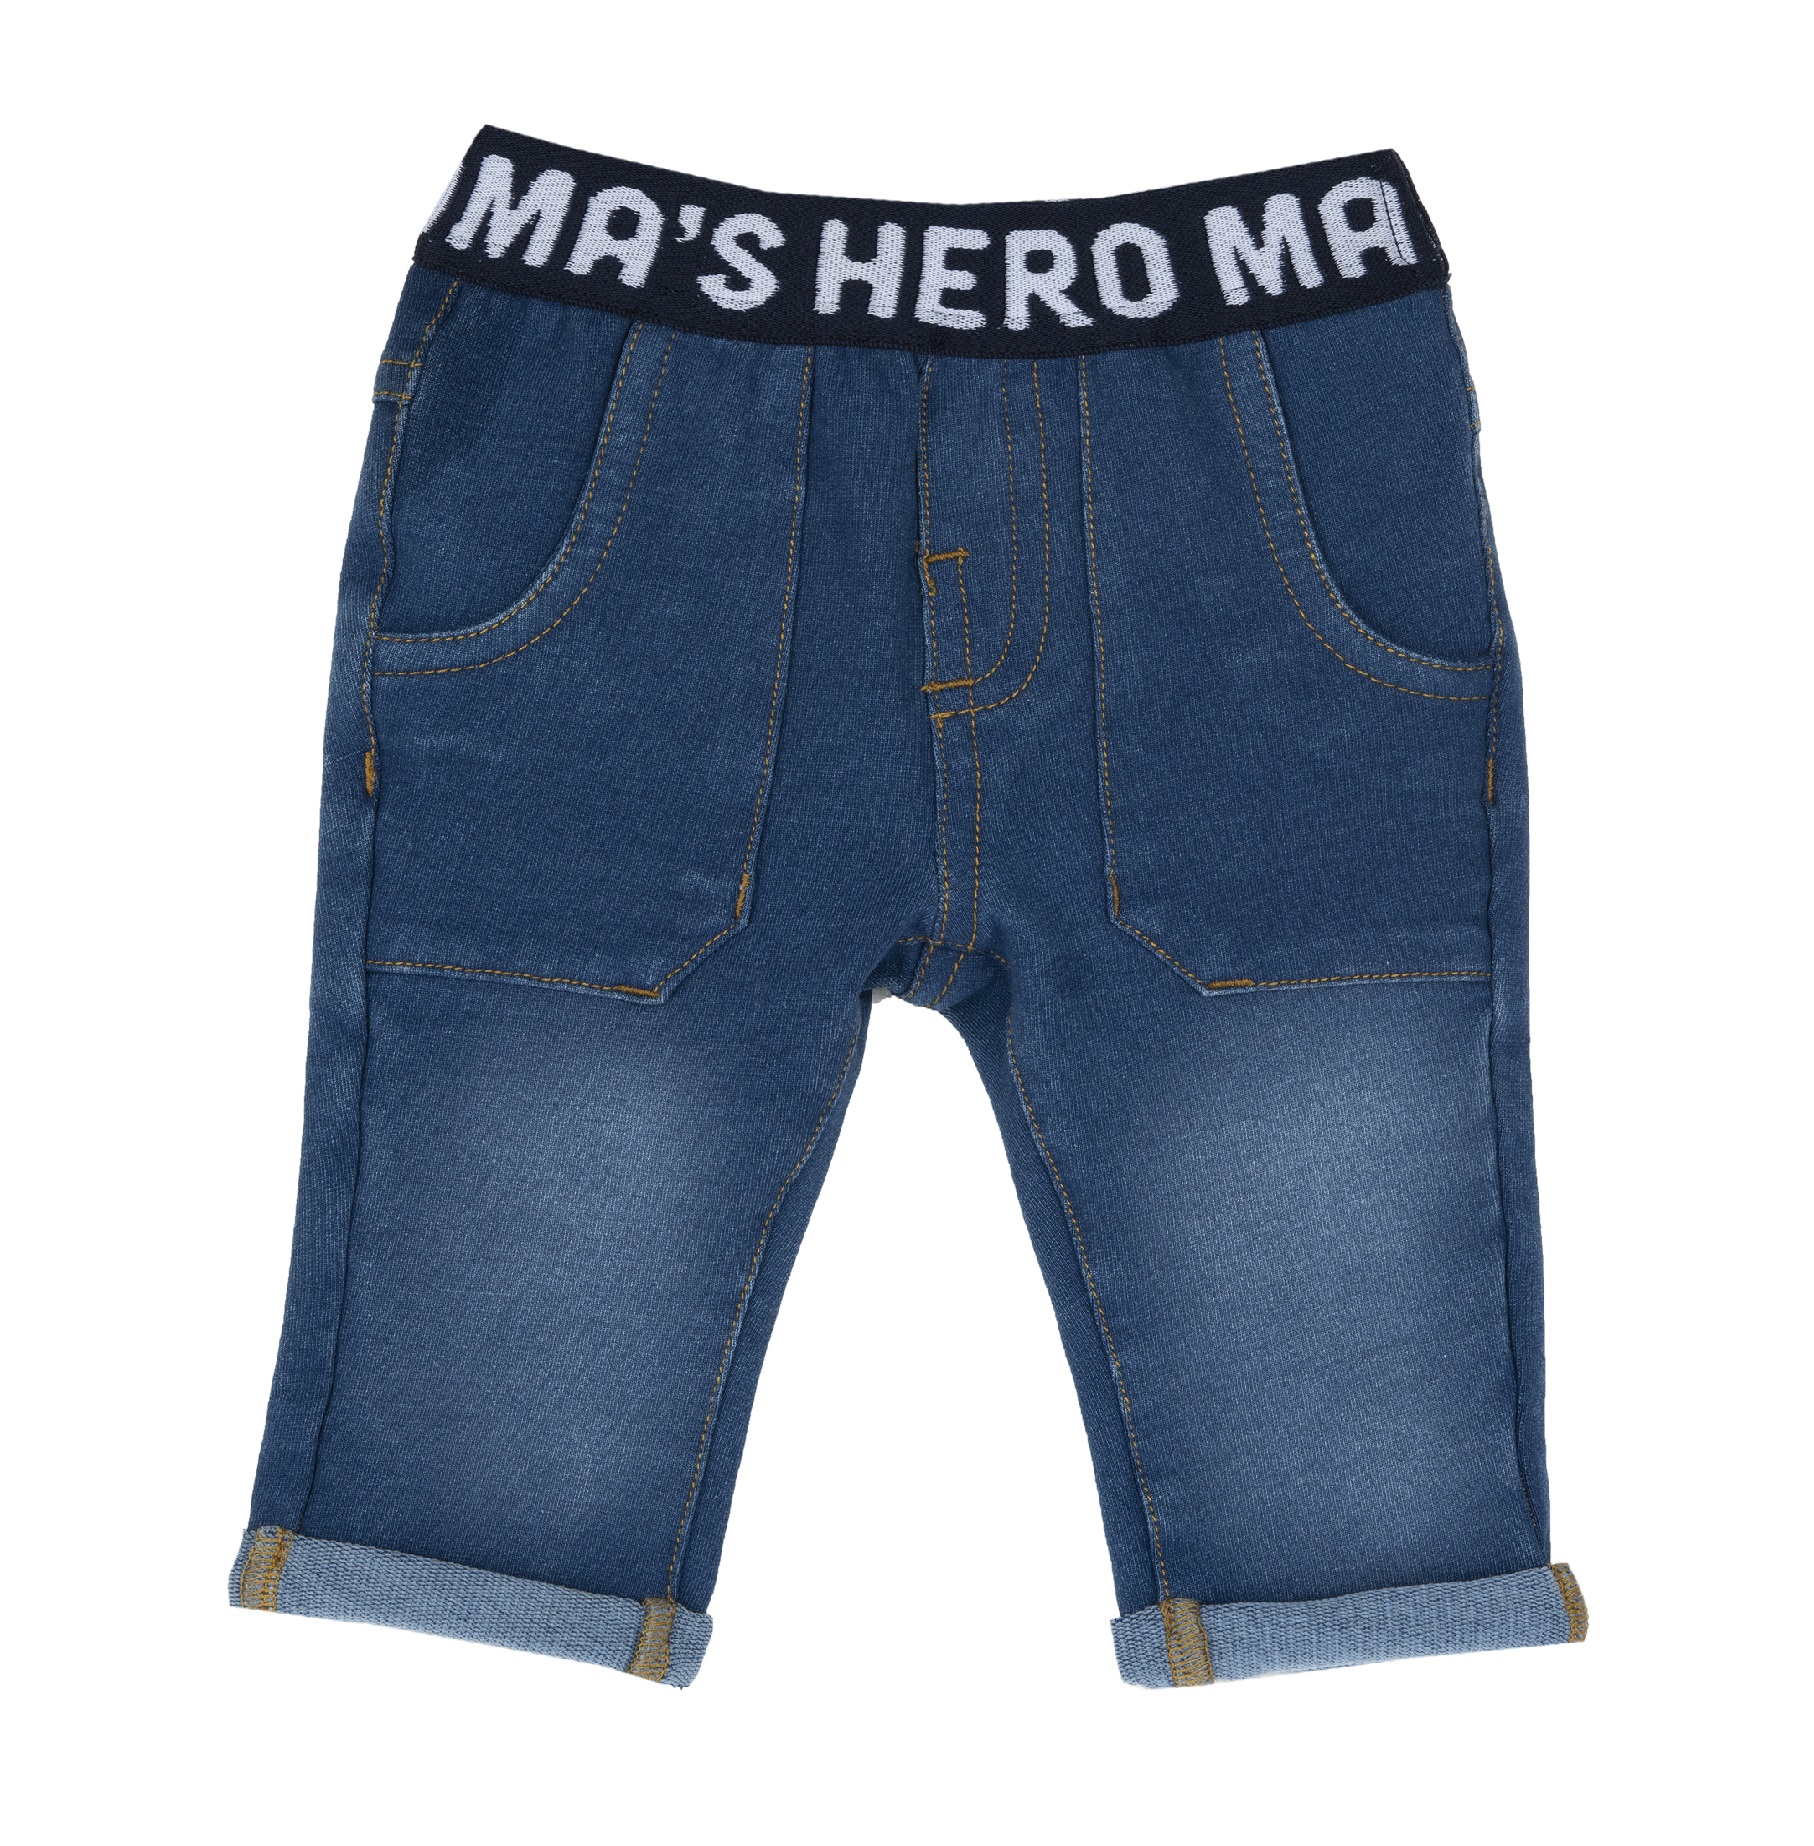 Marvel Industrial wipe out Pantaloni copii Chicco, albastru, 08762-63MFCO, 56